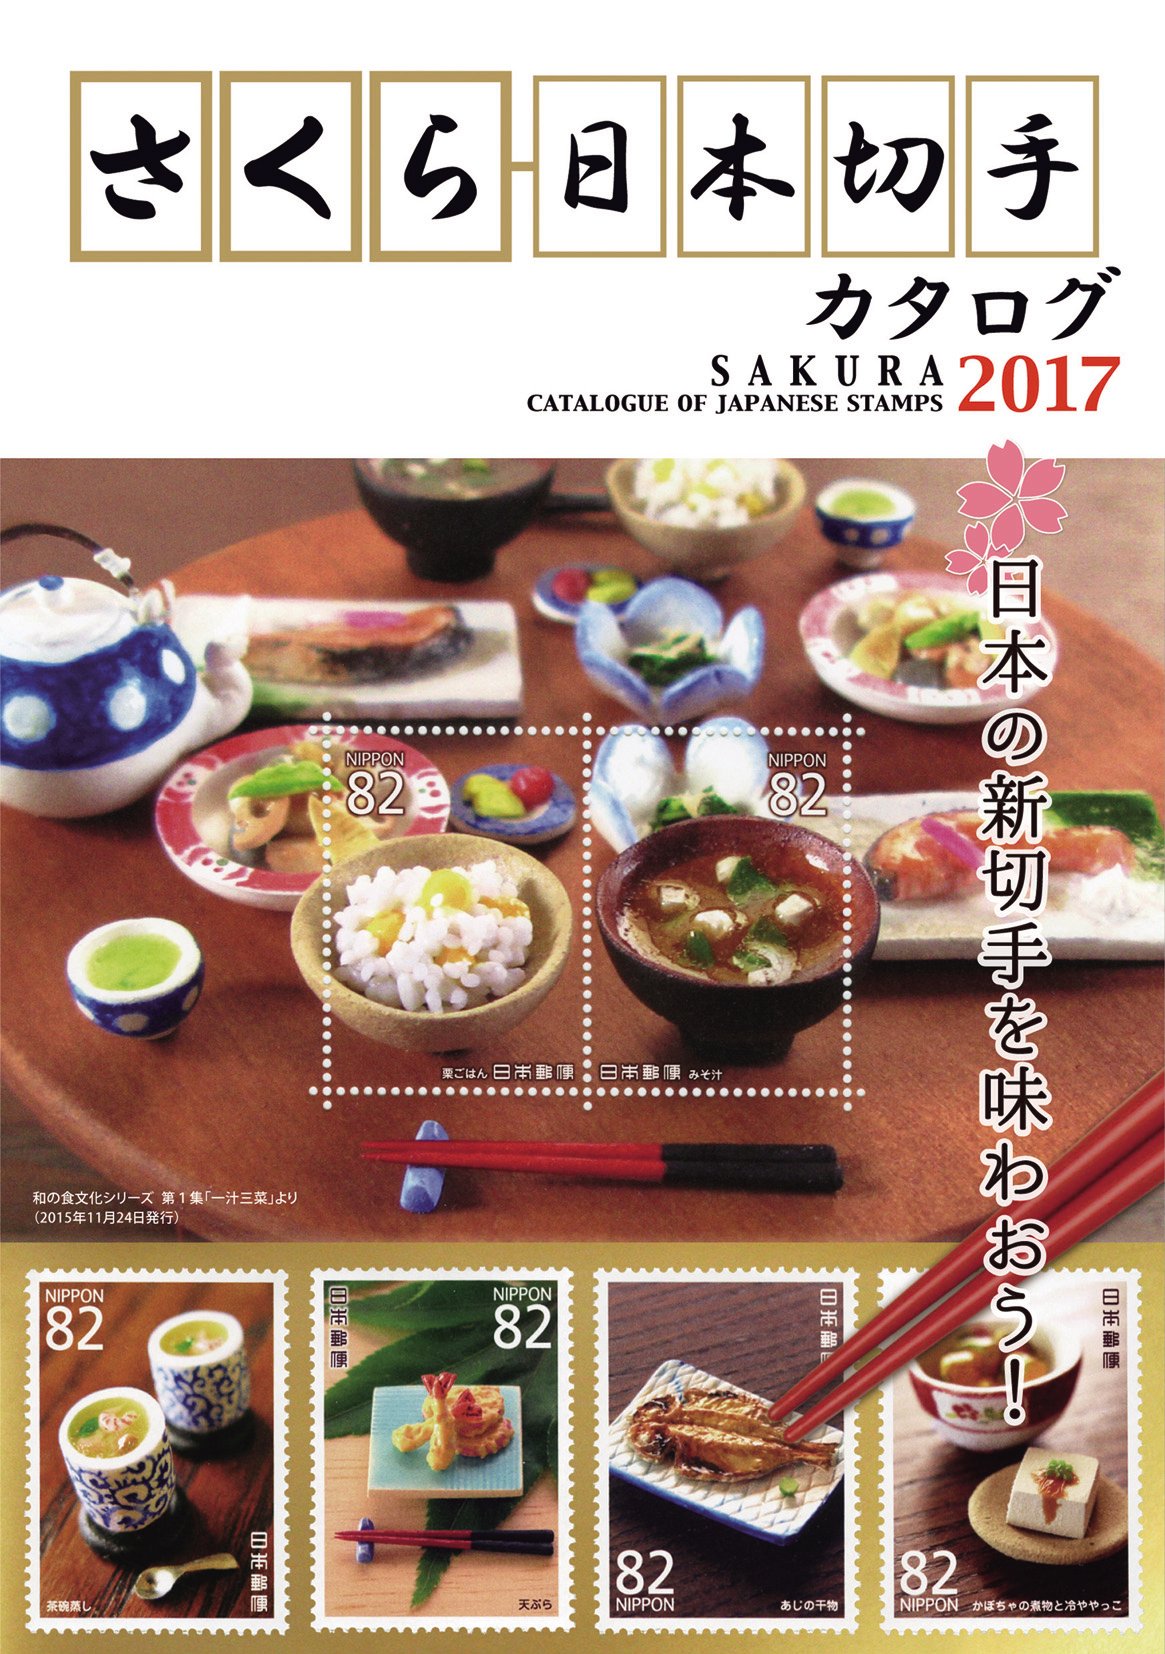 Sakura Japanese Stamp Catalogue 2017 Edition